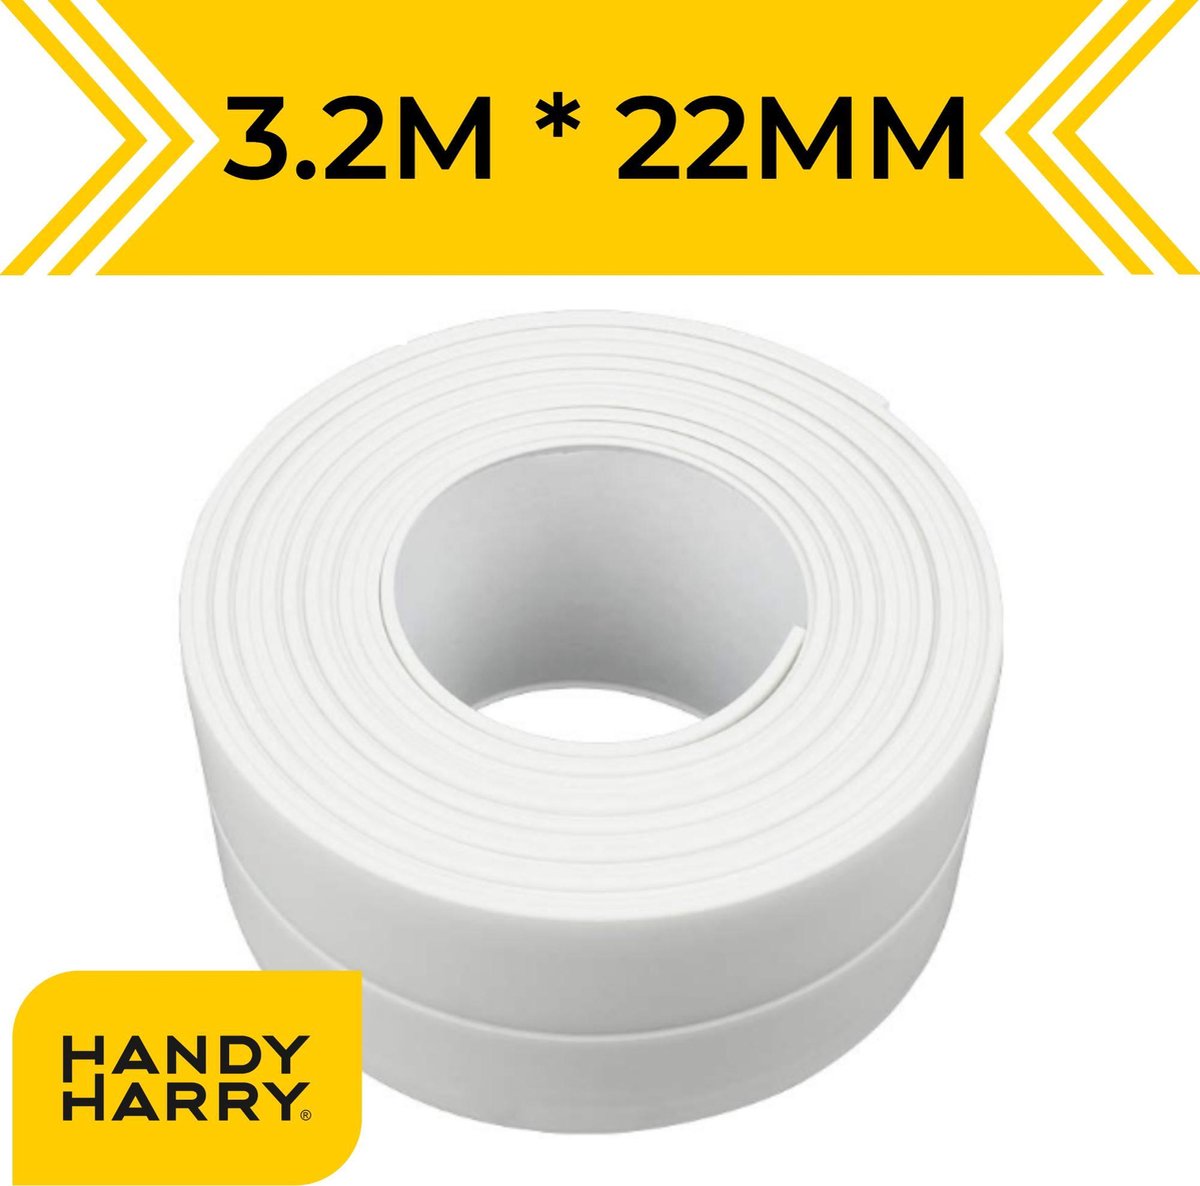 HANDY HARRY® Afdichtstrip 3.2m x 22mm - Kitstrip - Sanitairstrip - Wit - Handy Harry